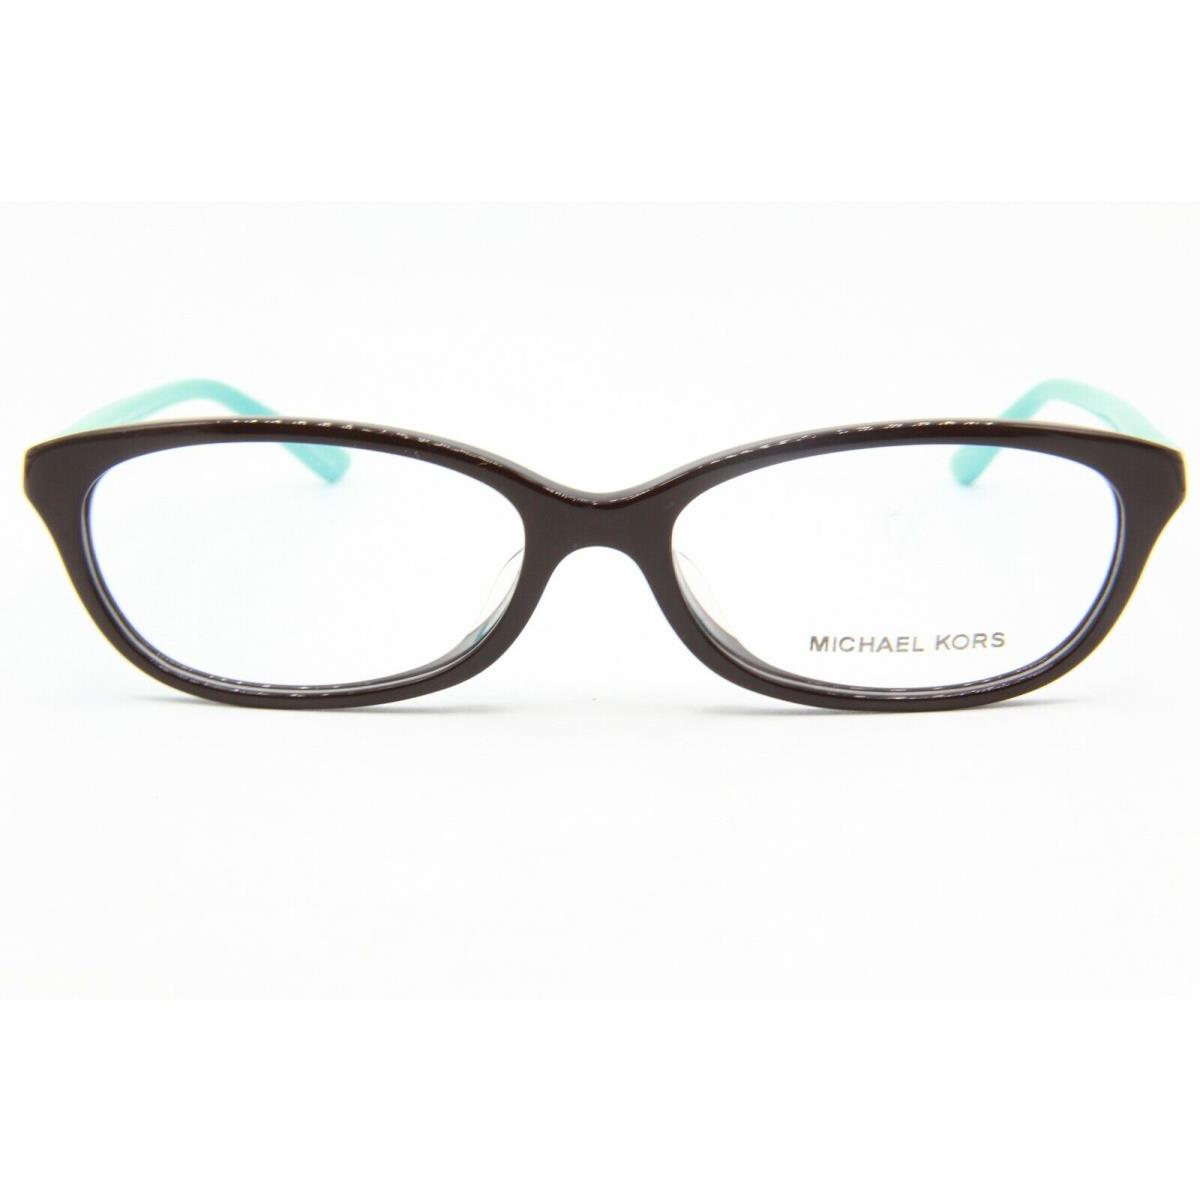 Michael Kors eyeglasses  - Brown Frame 0